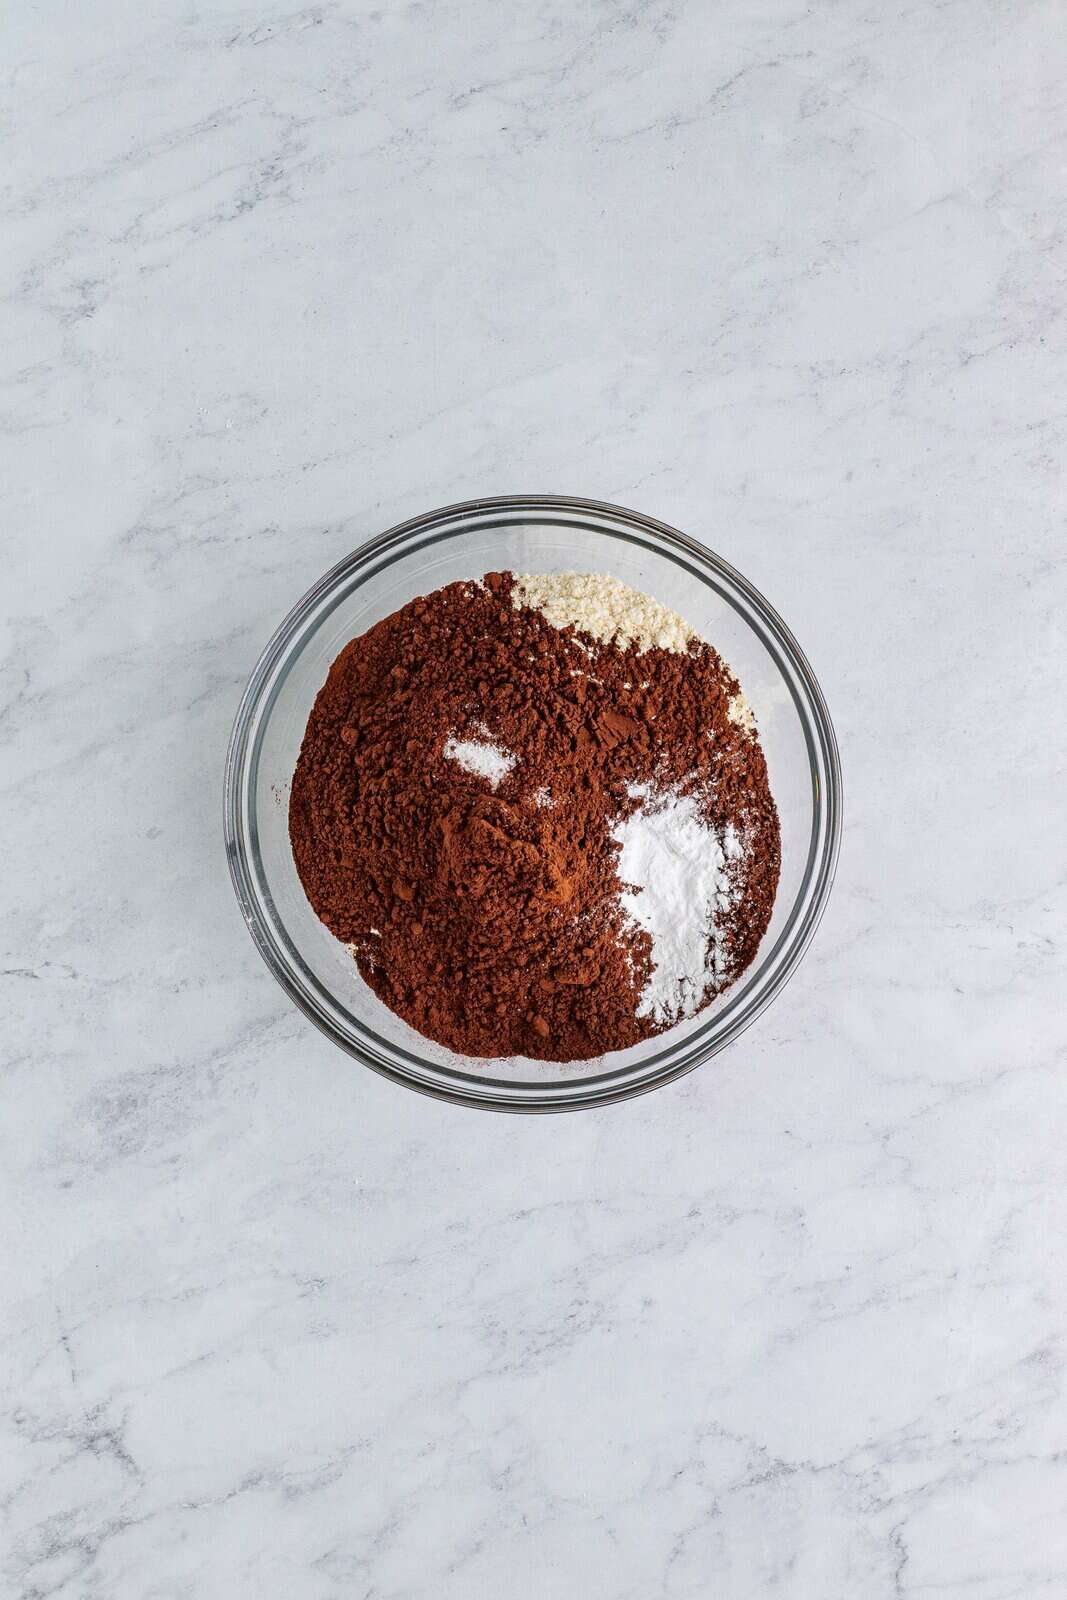 A small glass mixing bowl of flour, cocoa powder, baking powder.